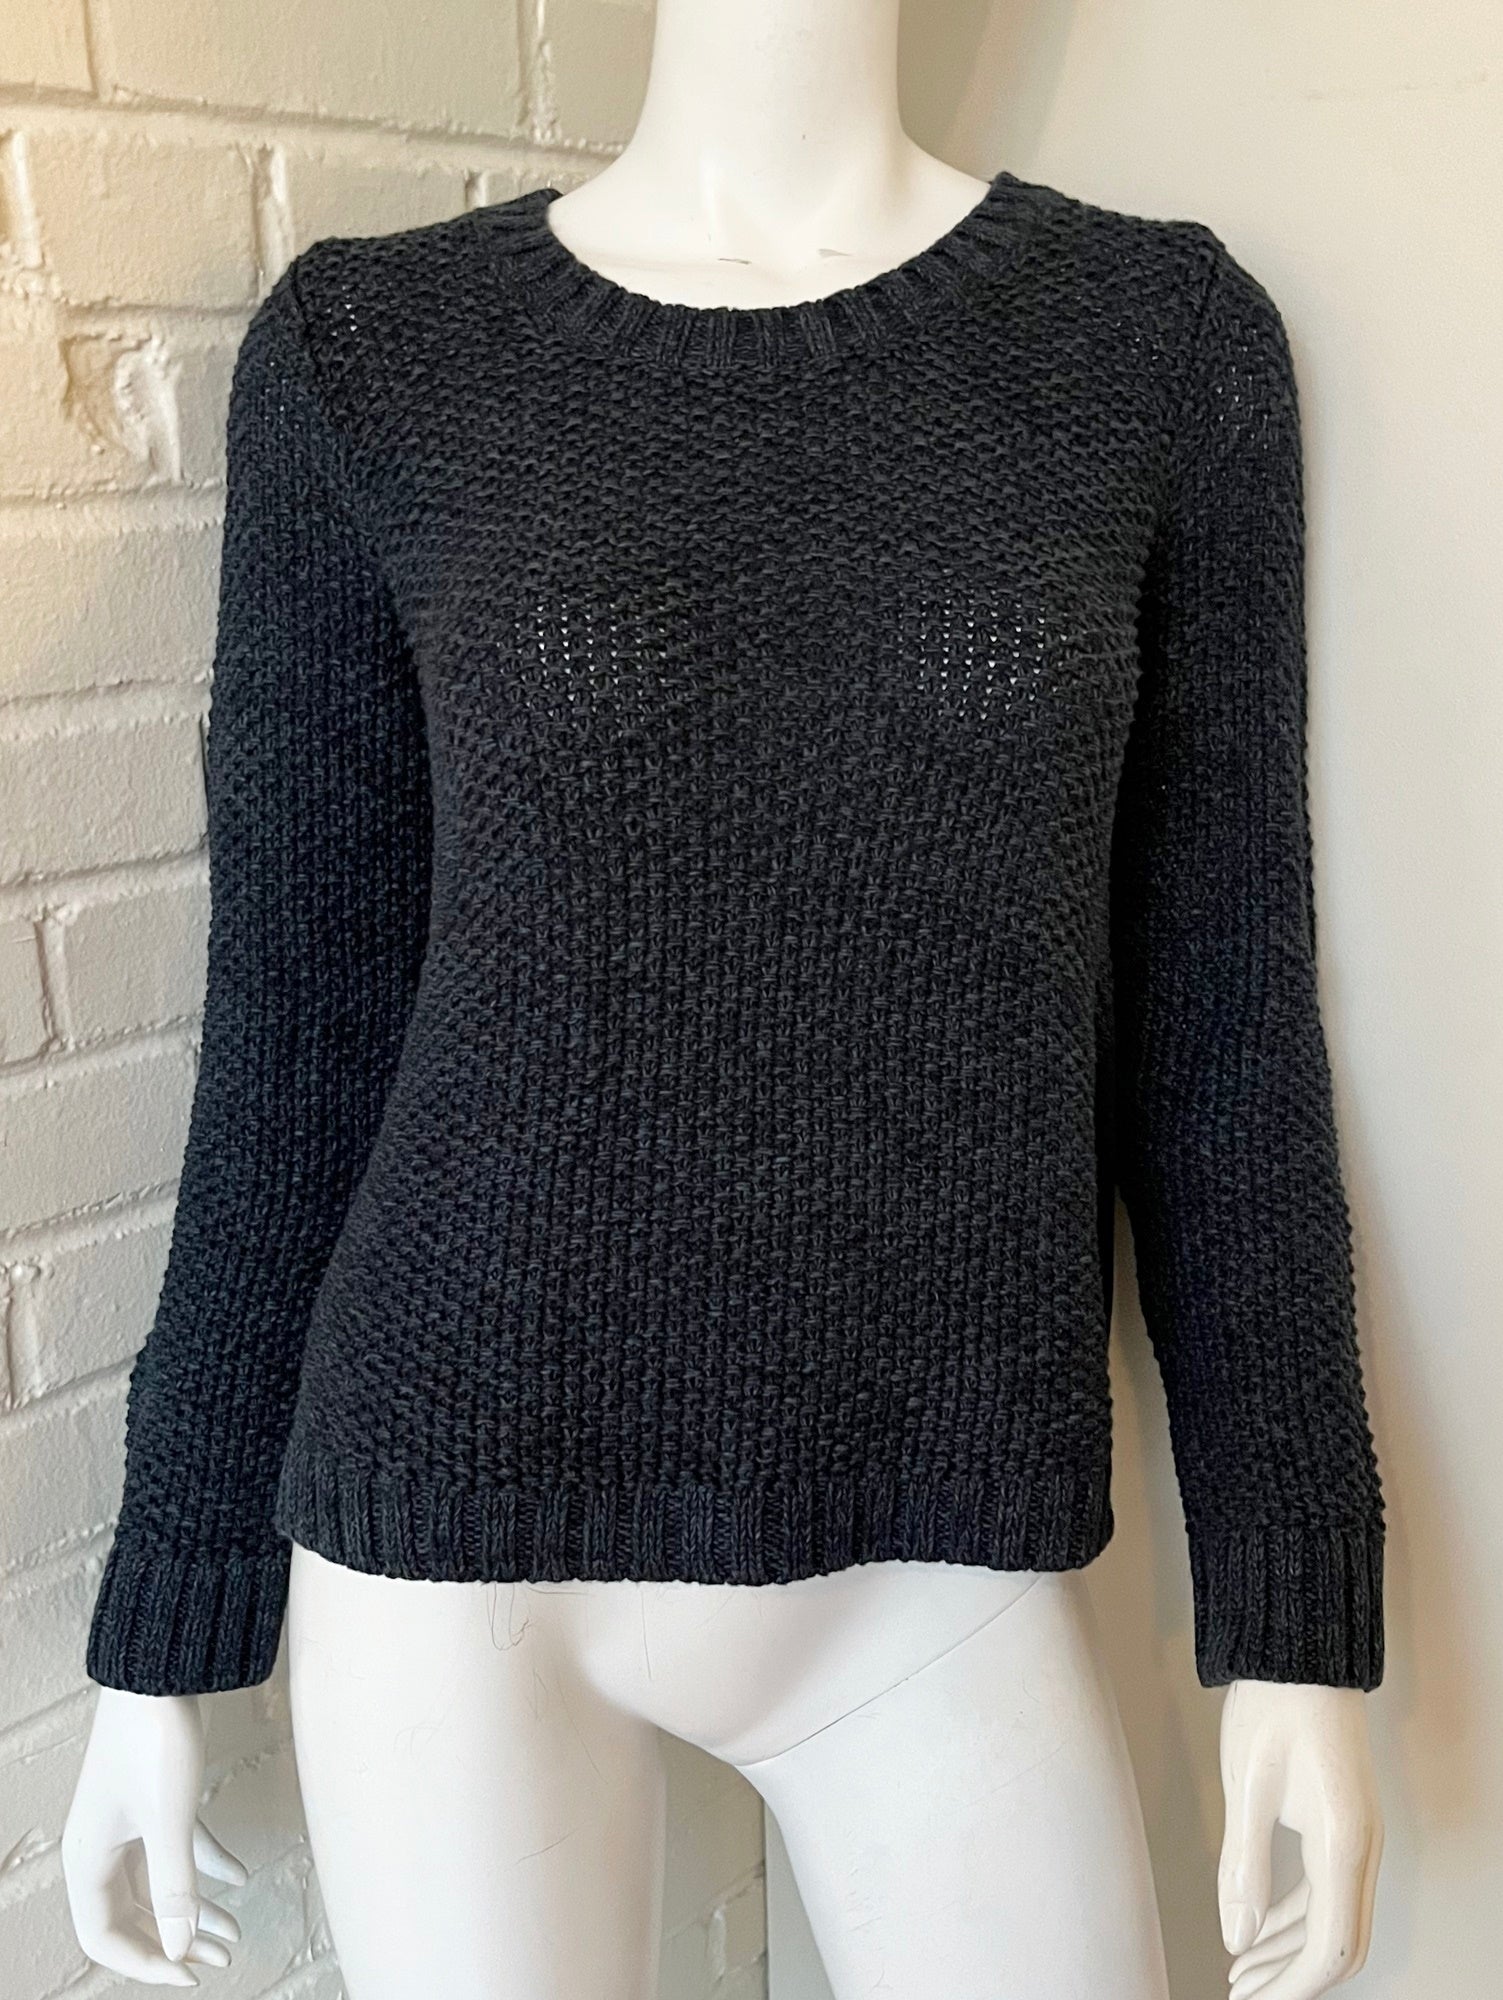 Cotton Knit Sweater Size Small